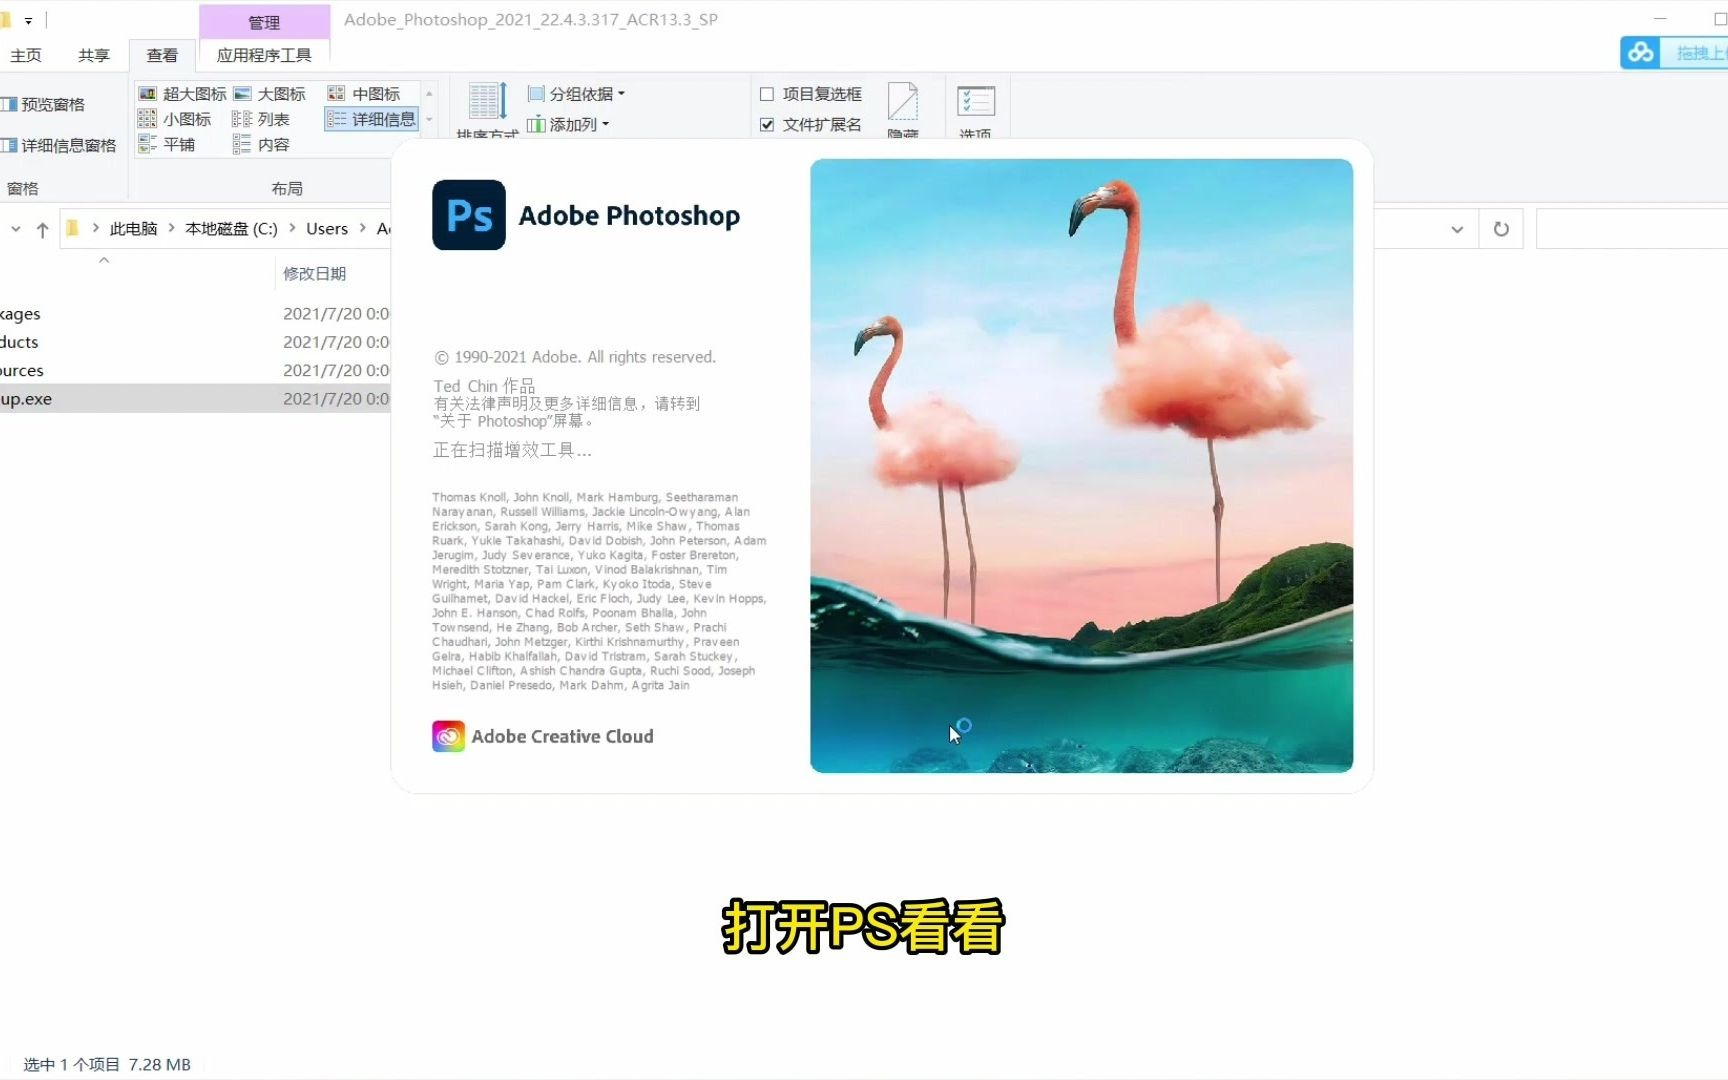 Cover of Adobe Photoshop 2021 (Version 22.4.3) [32|64bit] L.